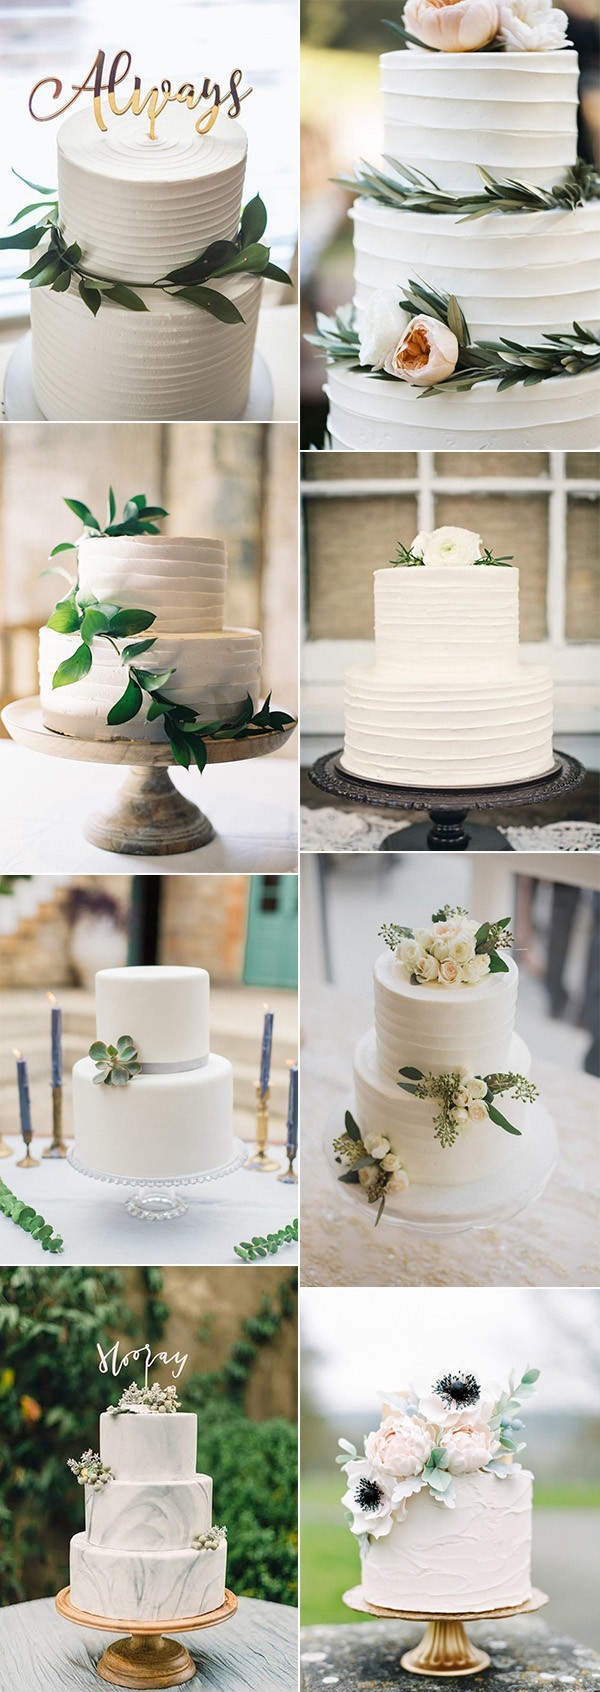 simple elegant greenery wedding cakes